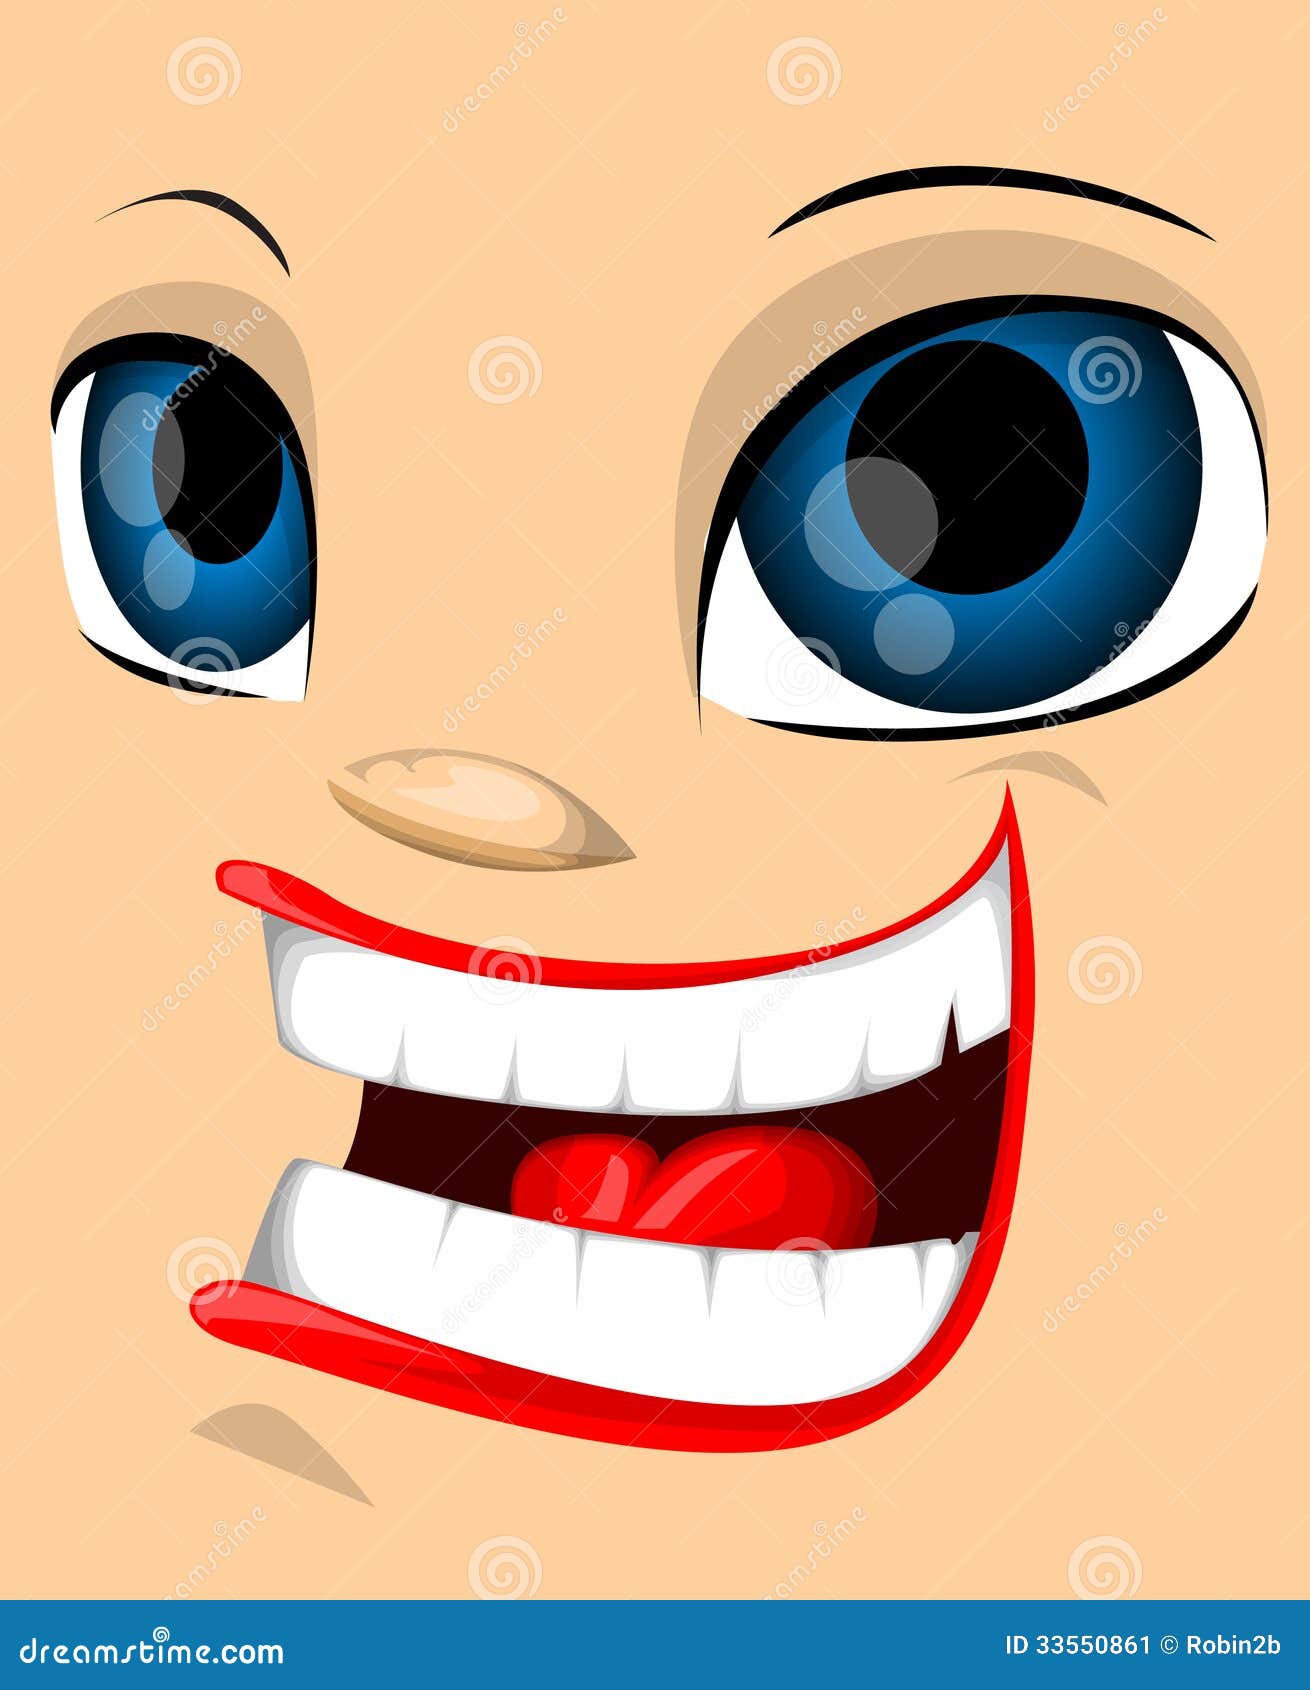 Ugly Cartoon Face Stock Image - Image: 33550861